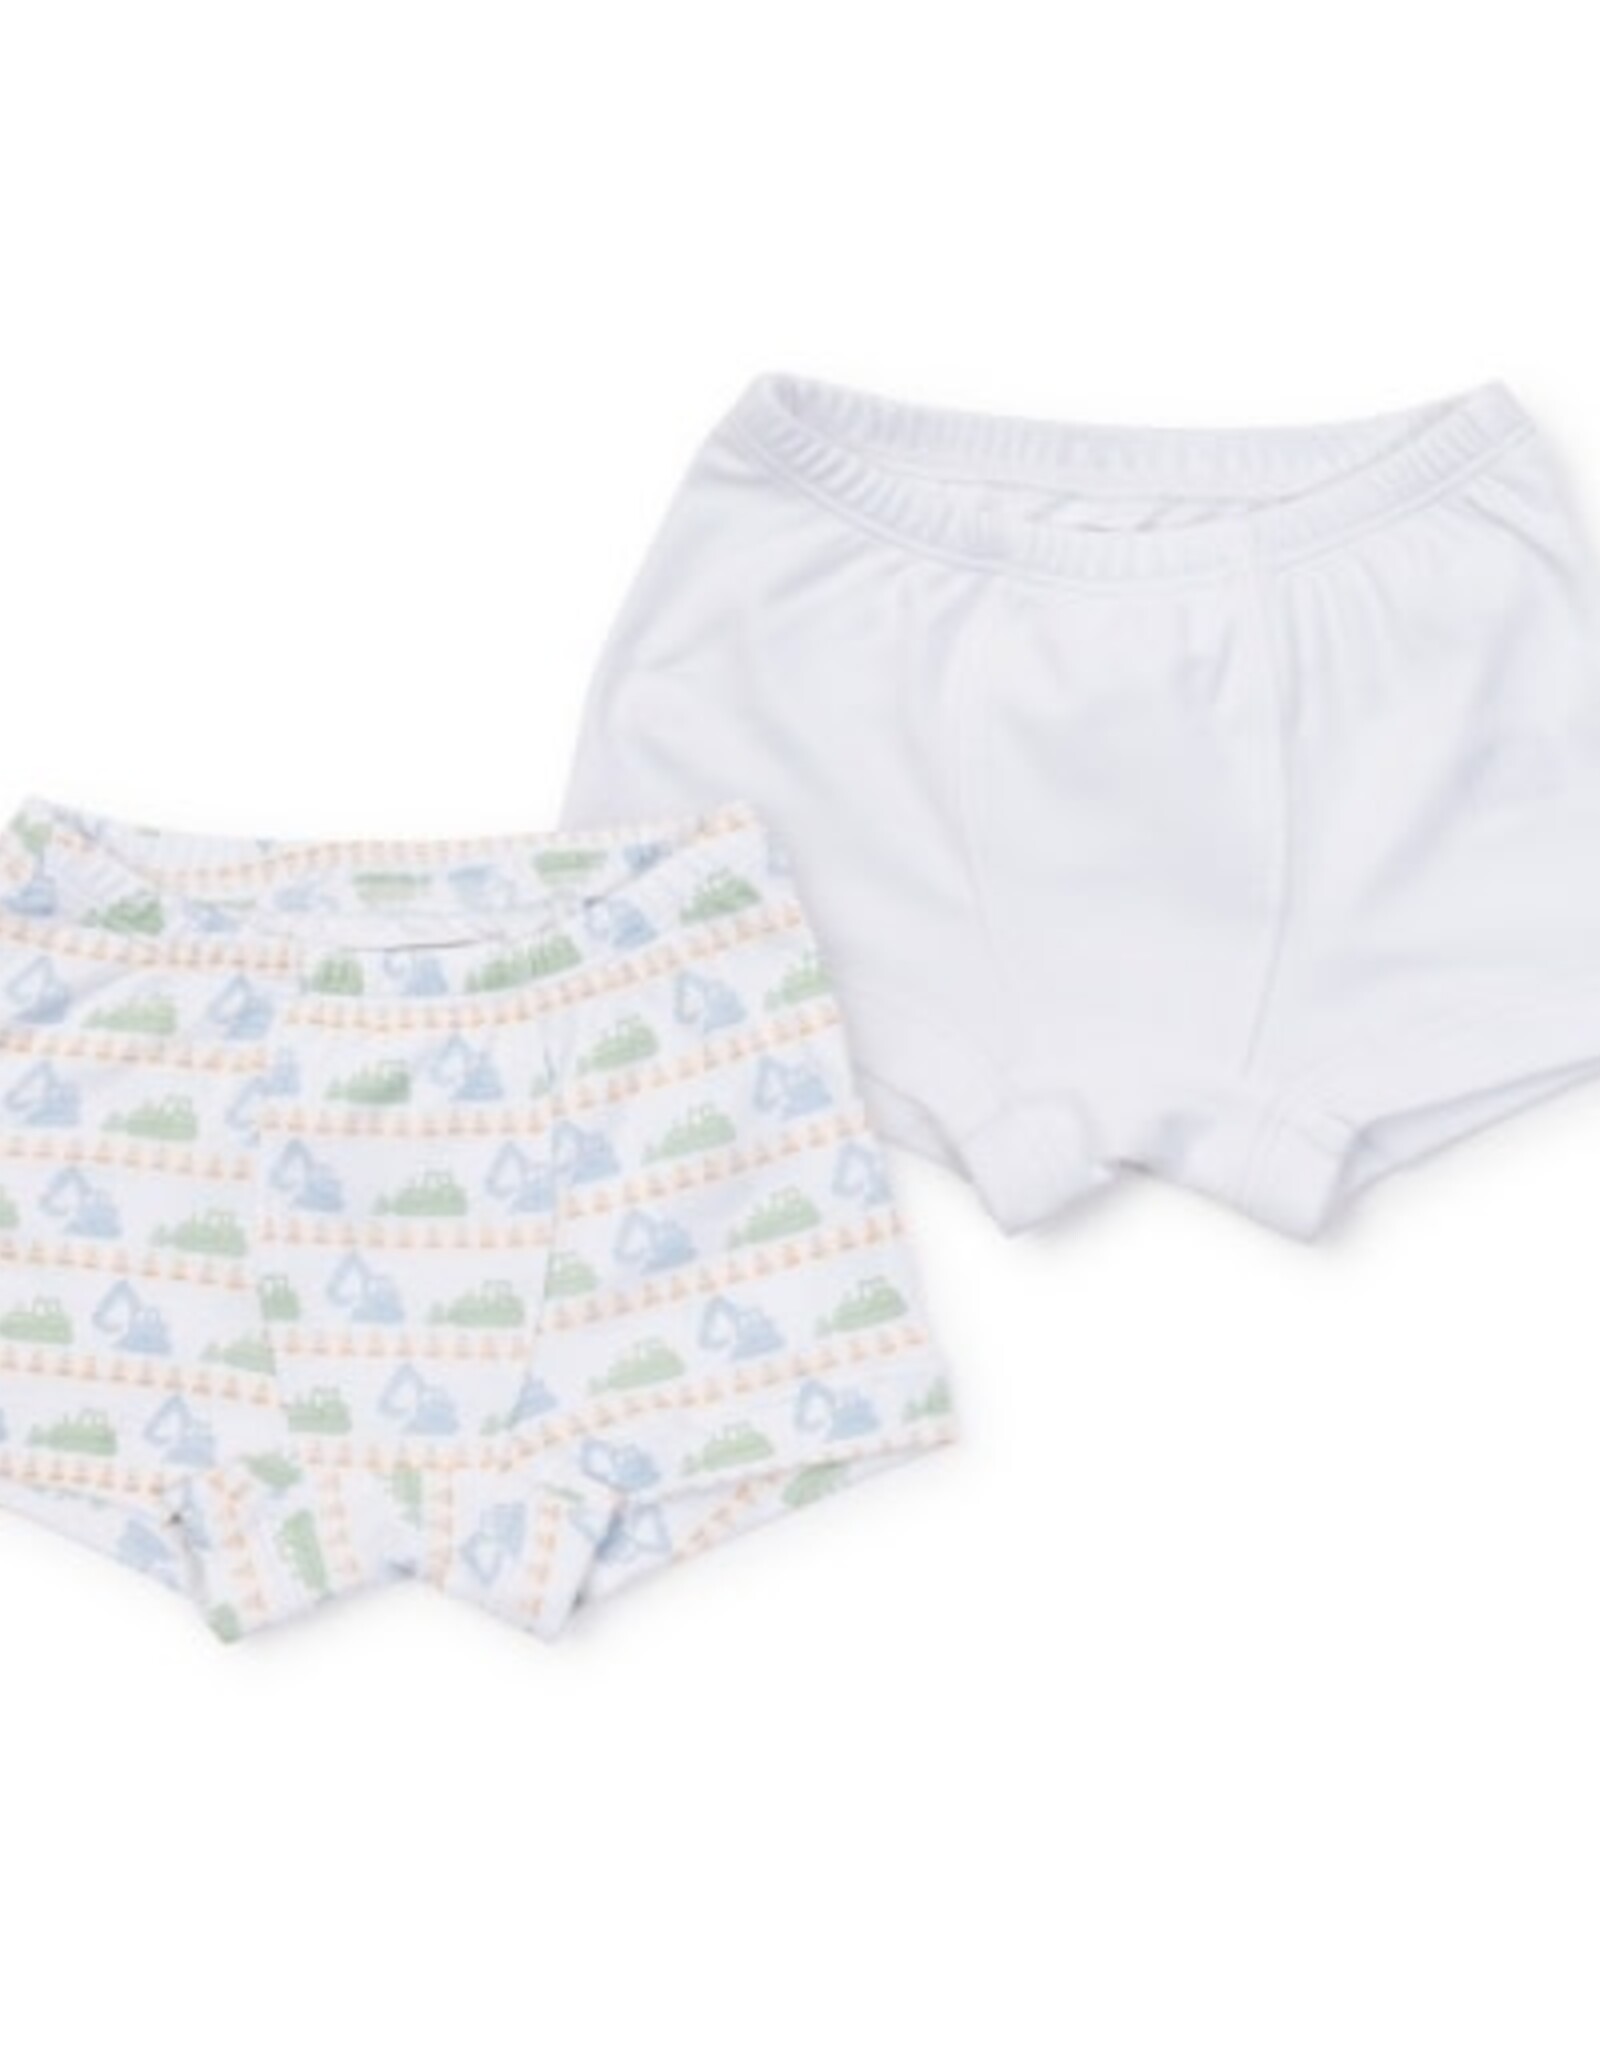 Lila + Hayes James Underwear Set, Construction & White